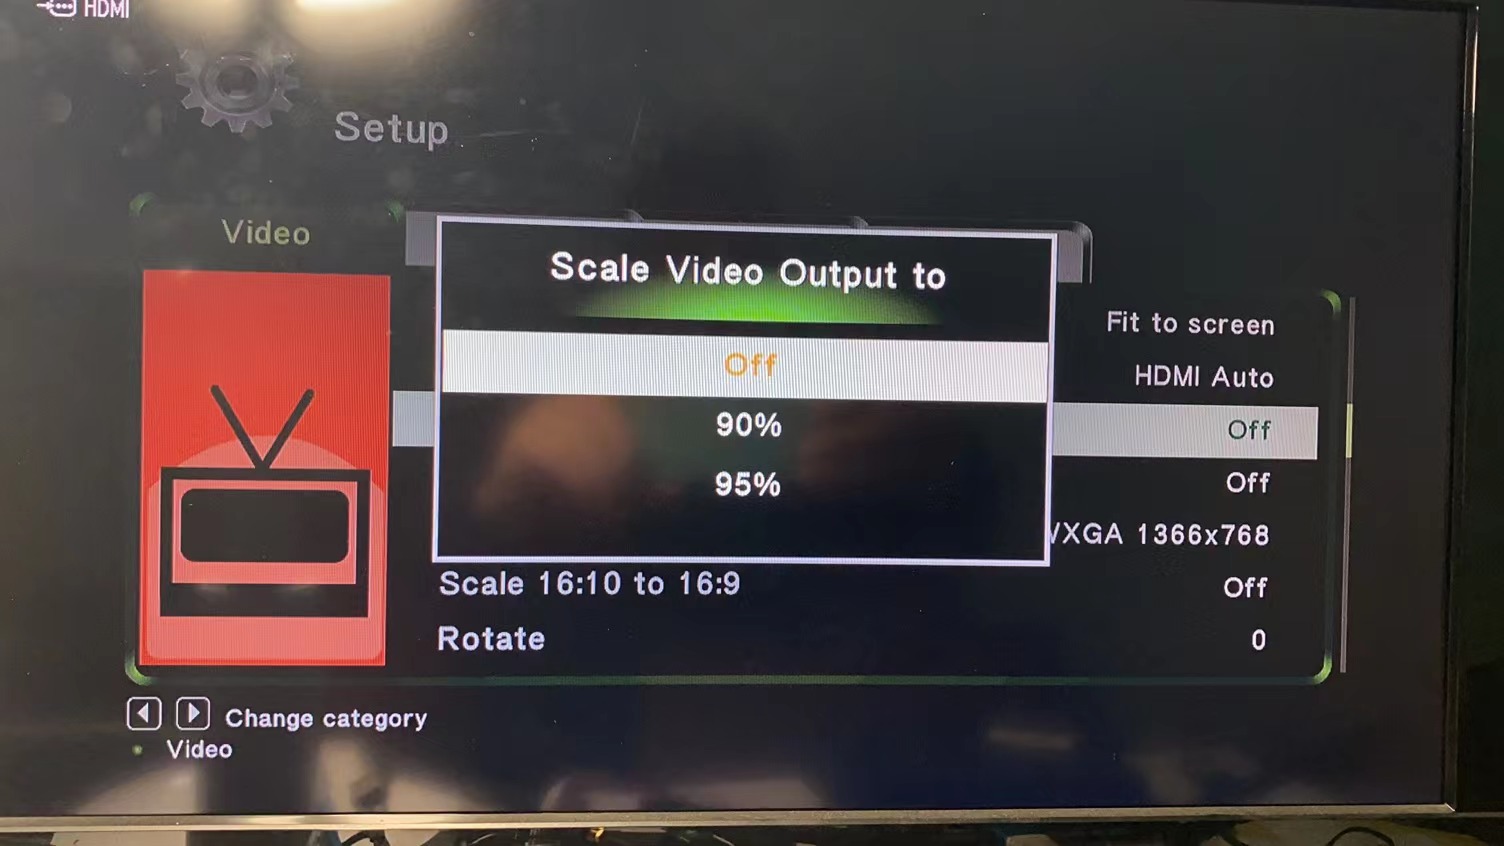 进入设置菜单Video->Scale Video Output to->95%